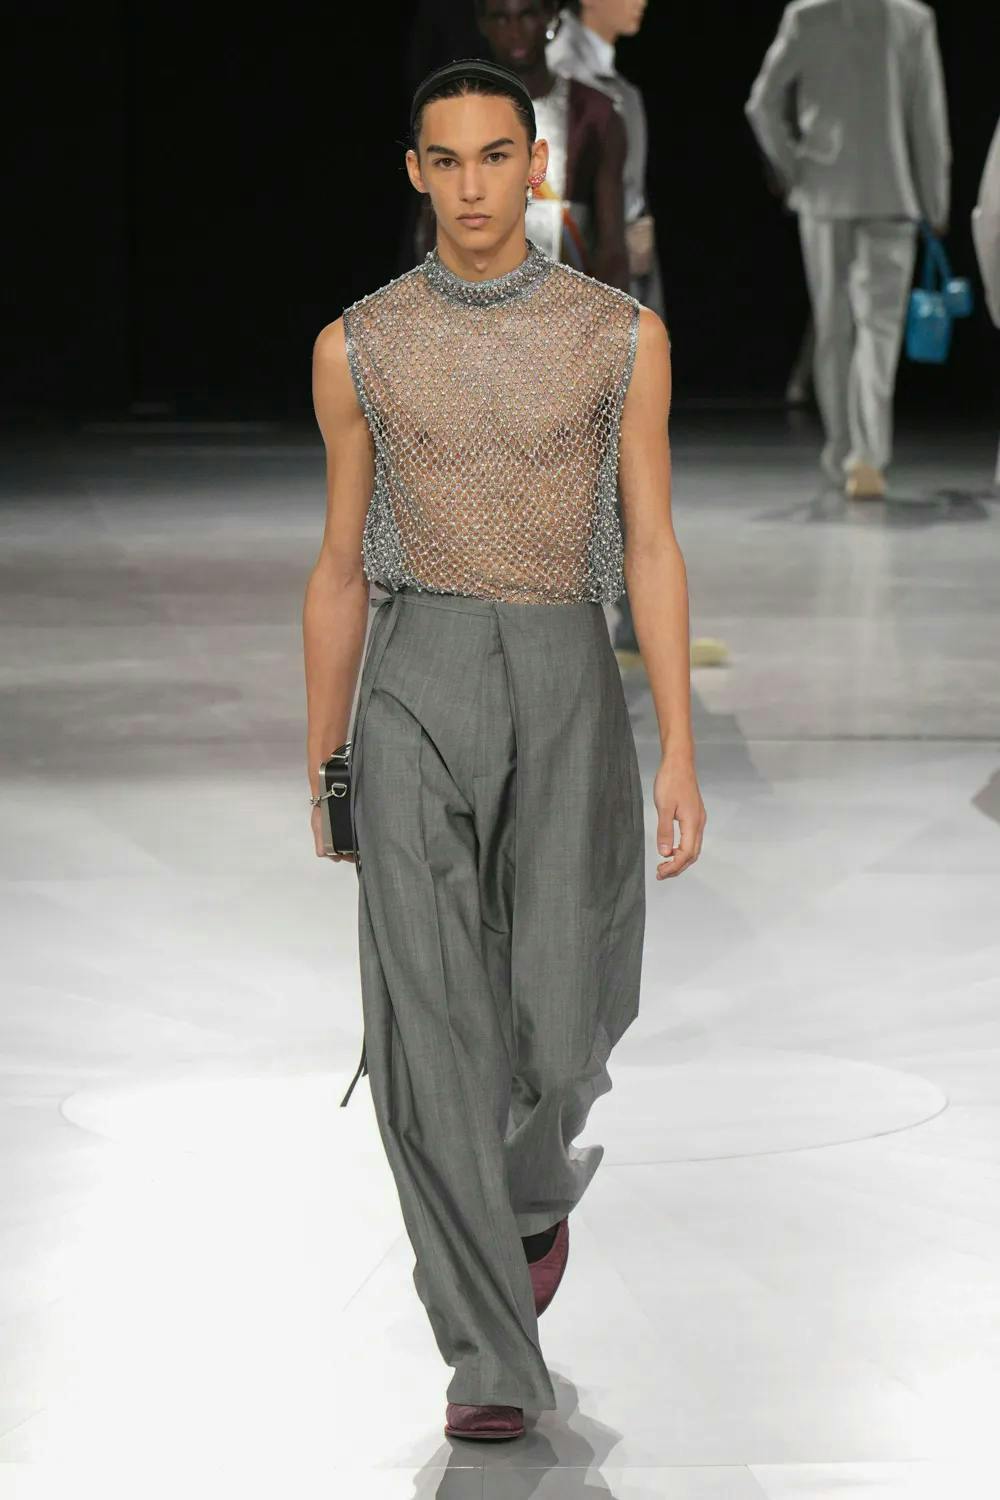 model on runway wearing mesh rhinestone top and gray pants